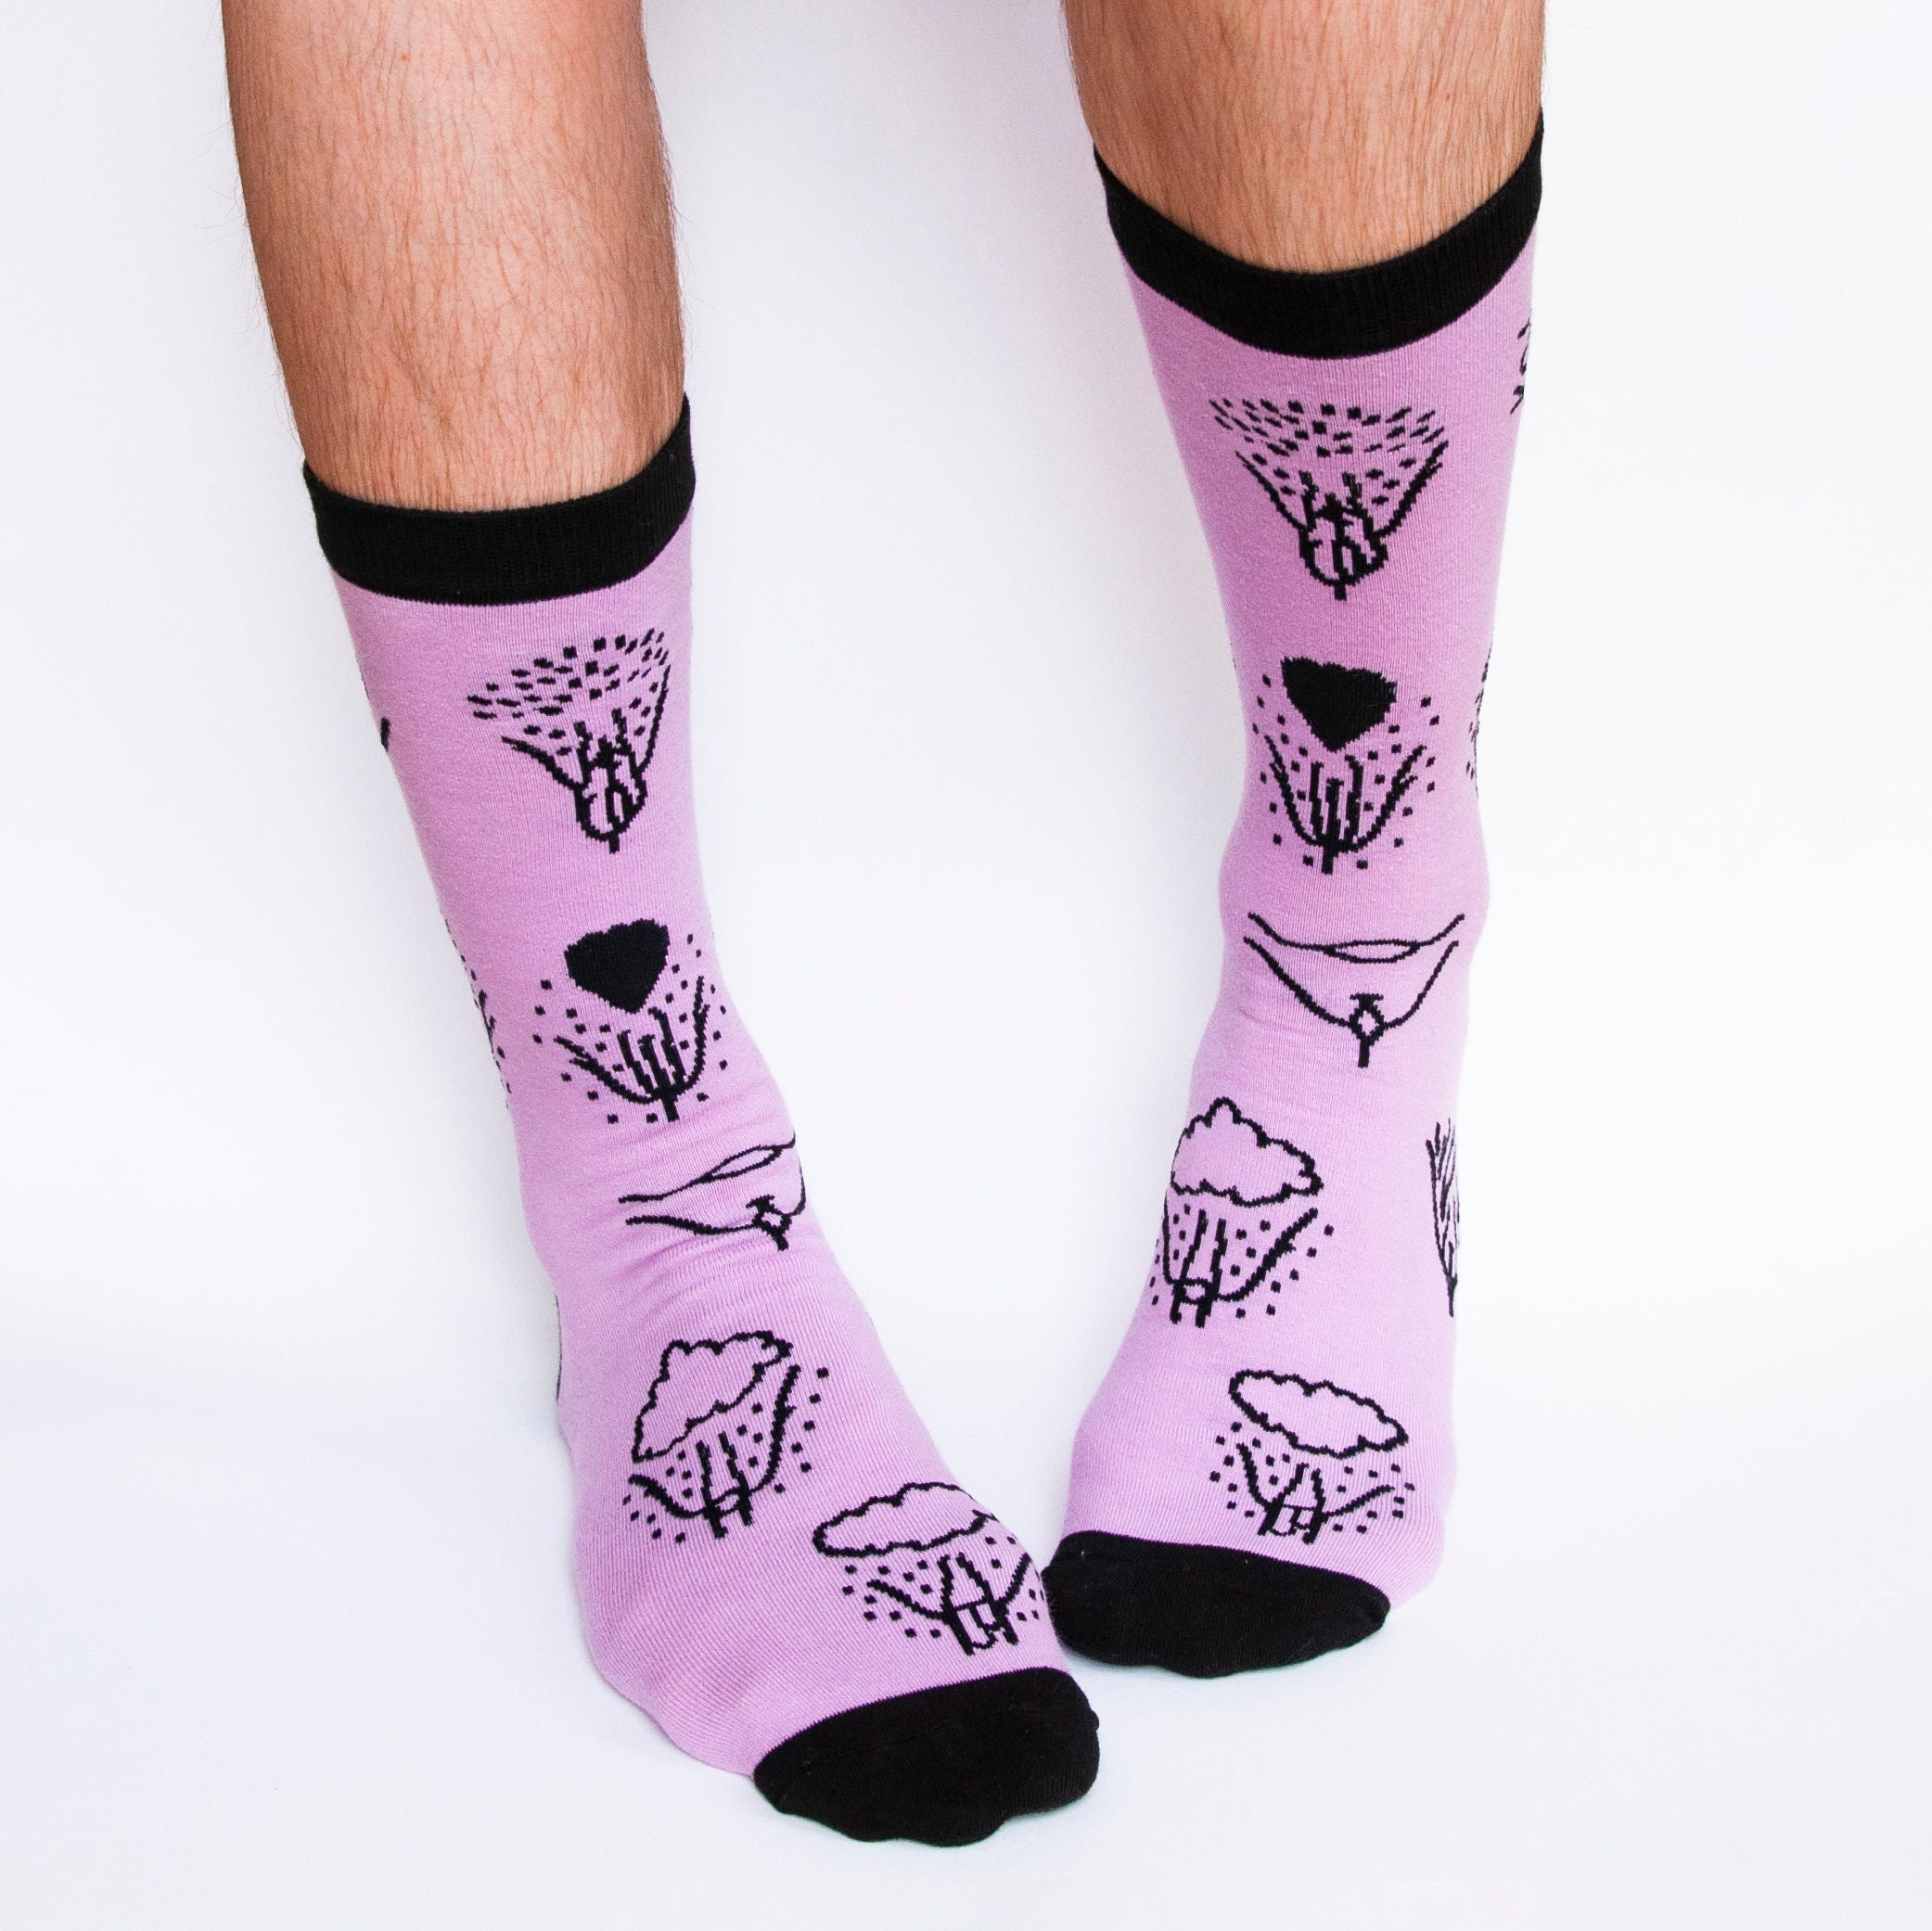 pussy socks Amazon.com